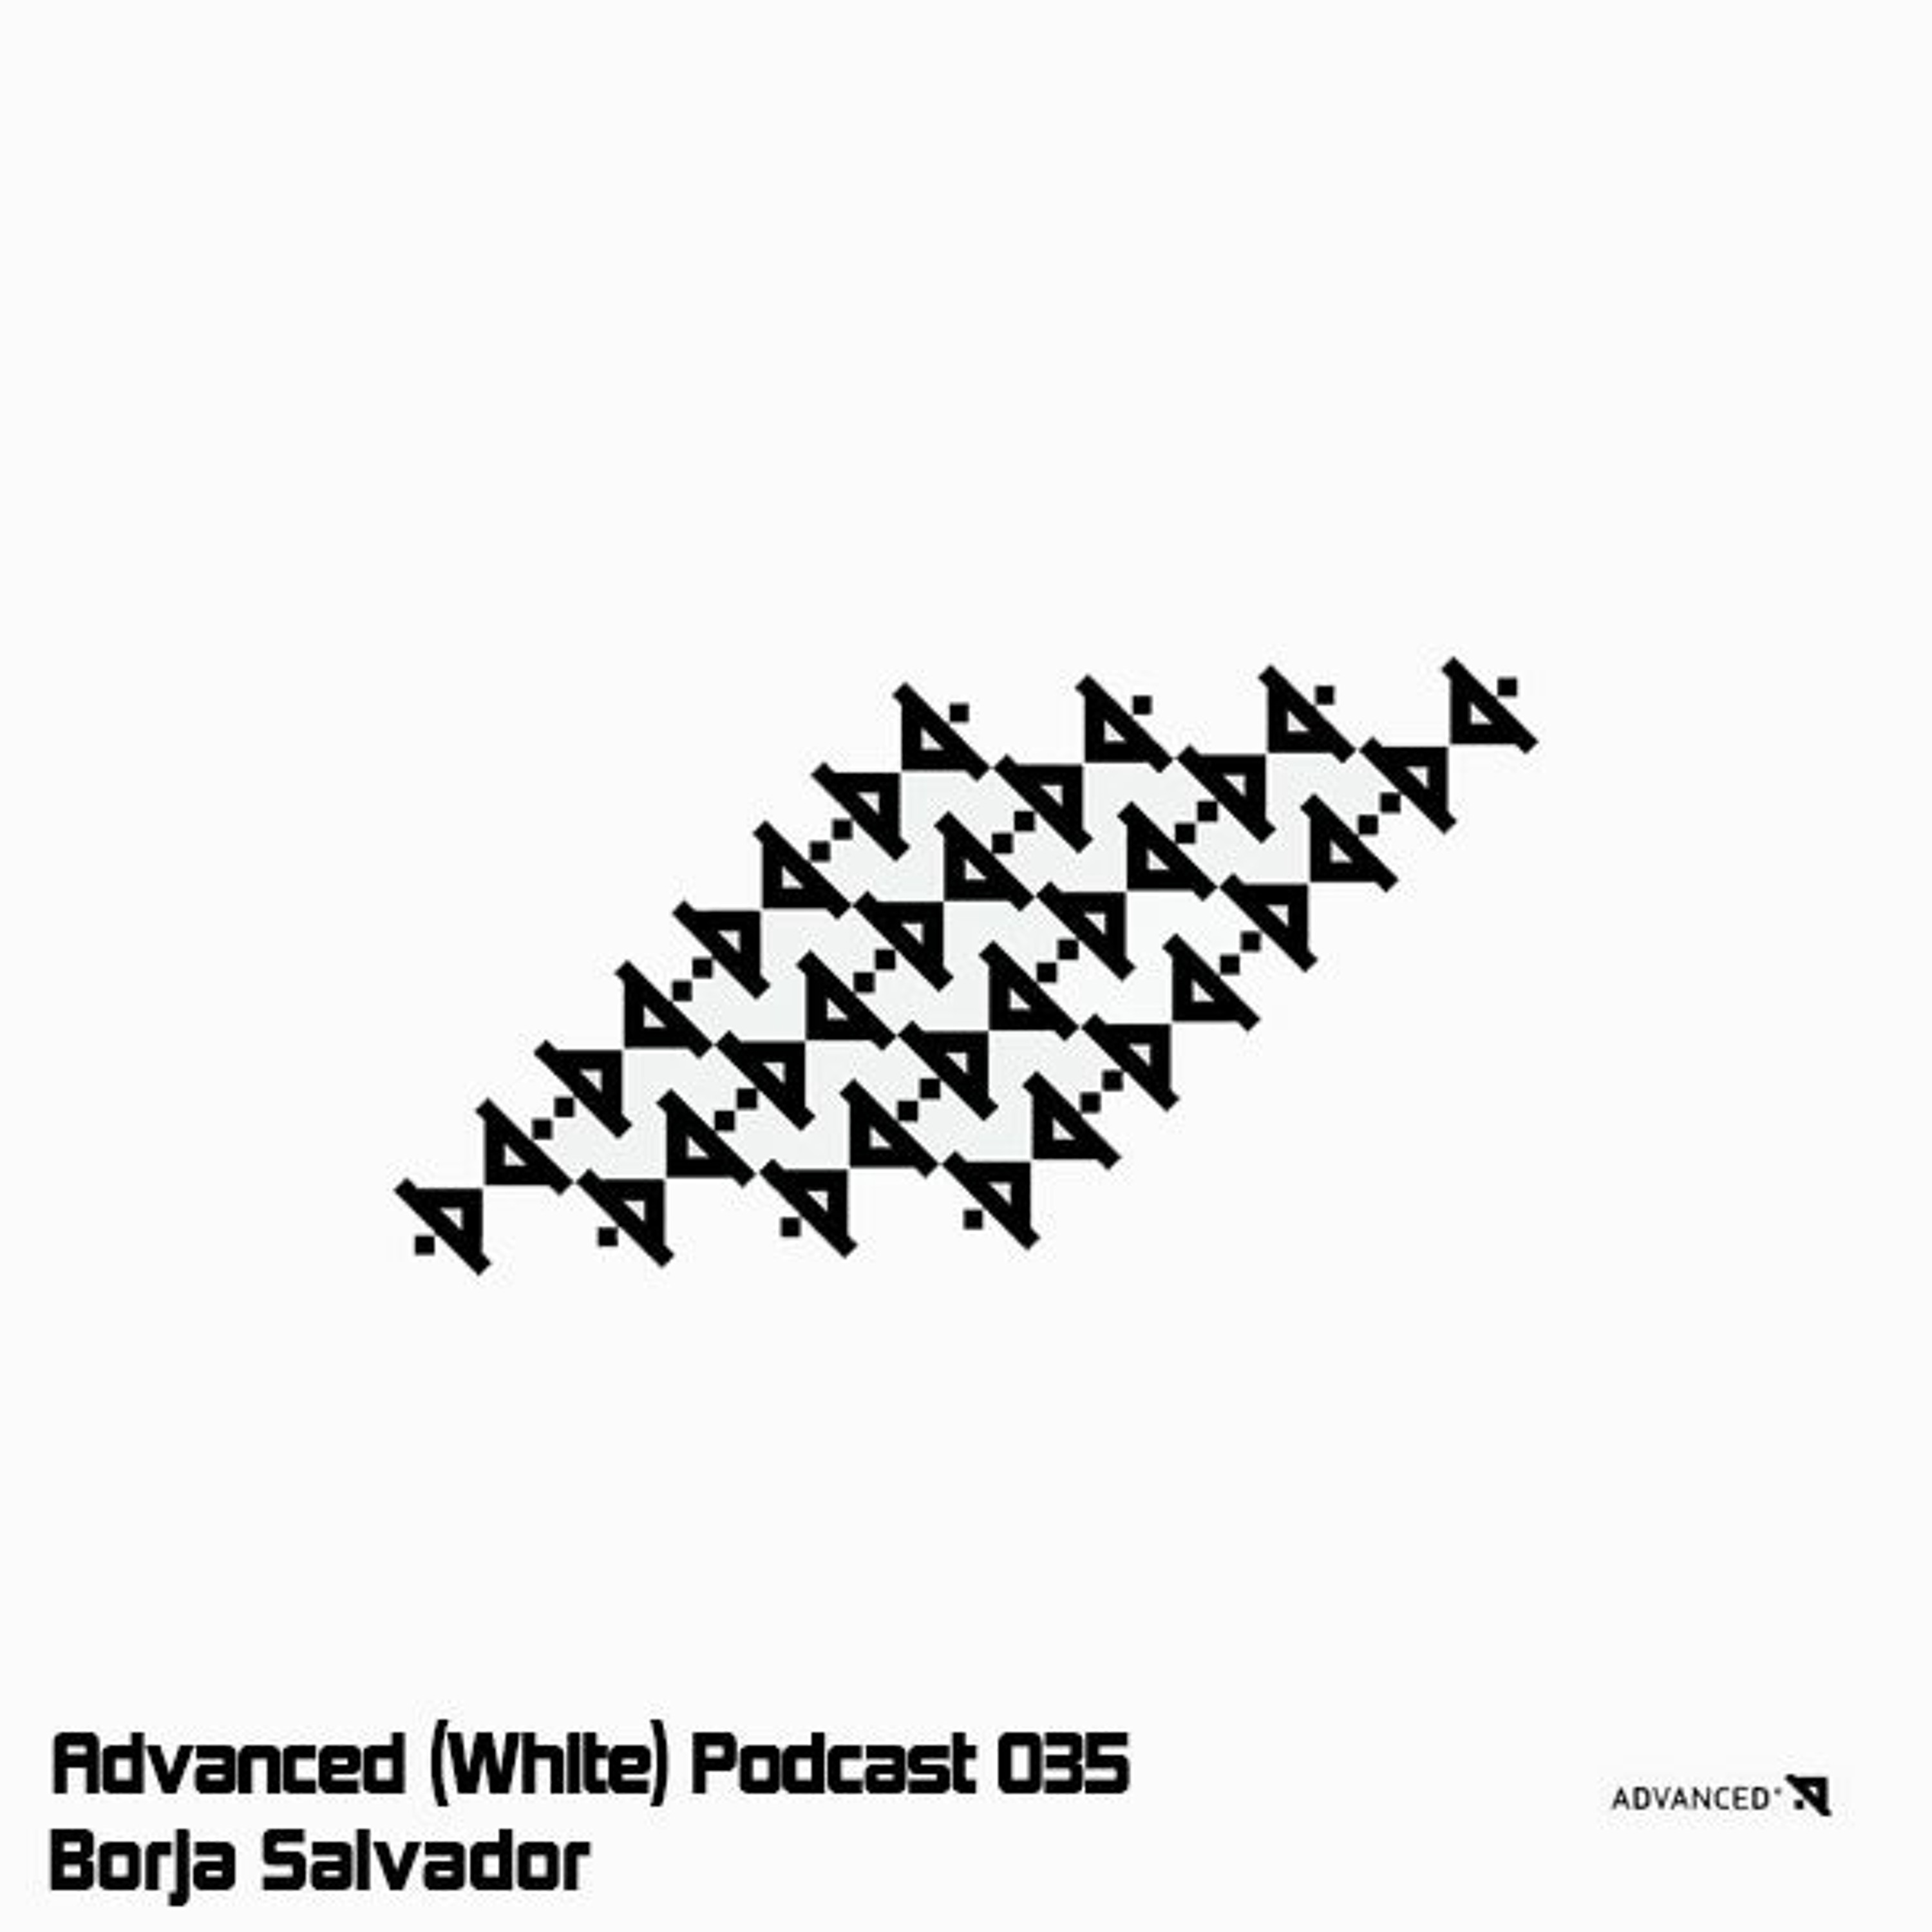 Advanced (White) Podcast 035 with Borja Salvador